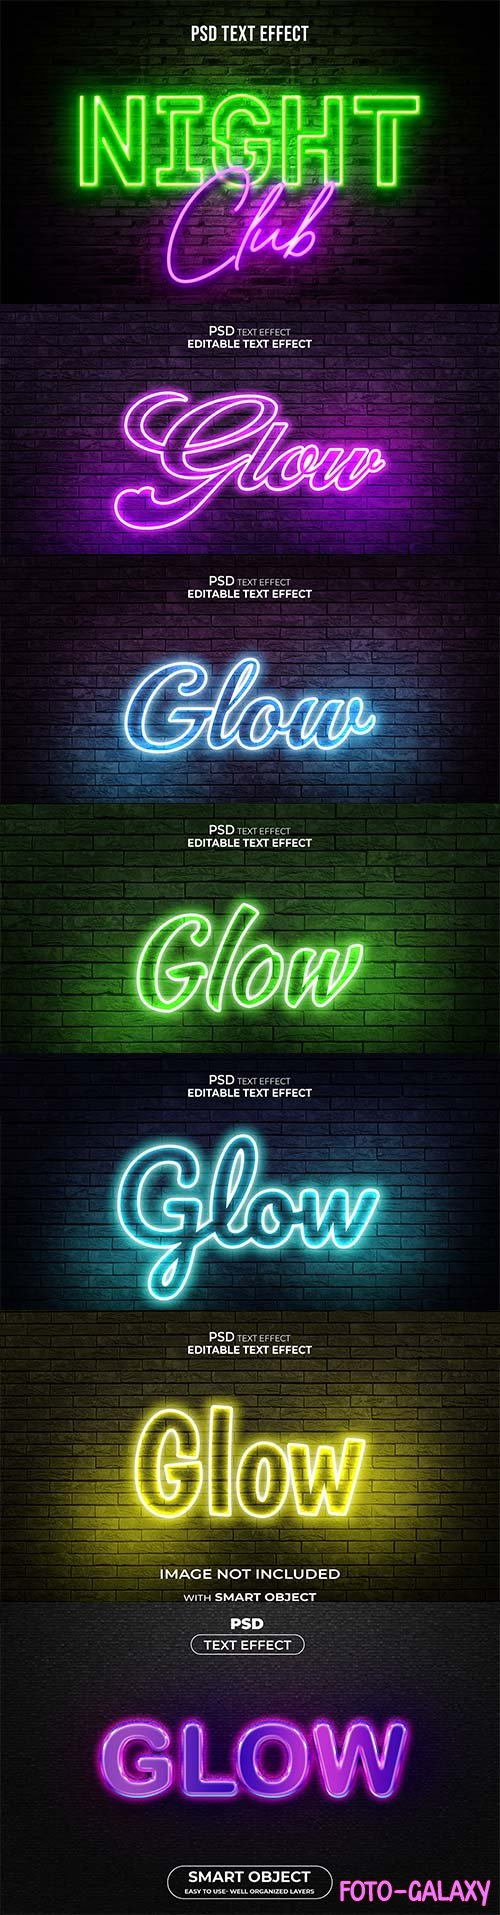 Glow text effect premium psd